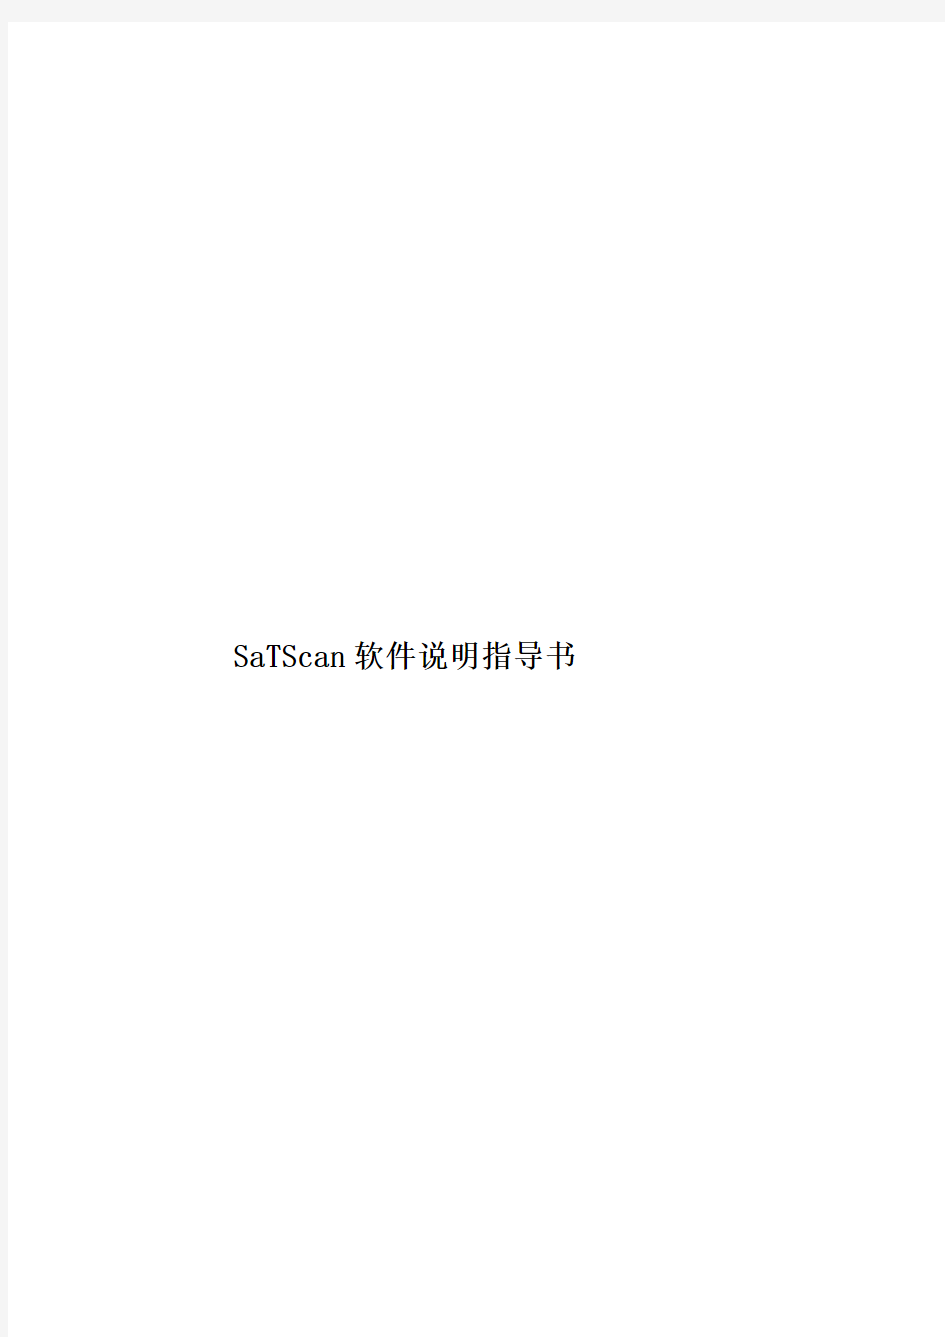 SaTScan软件说明指导书